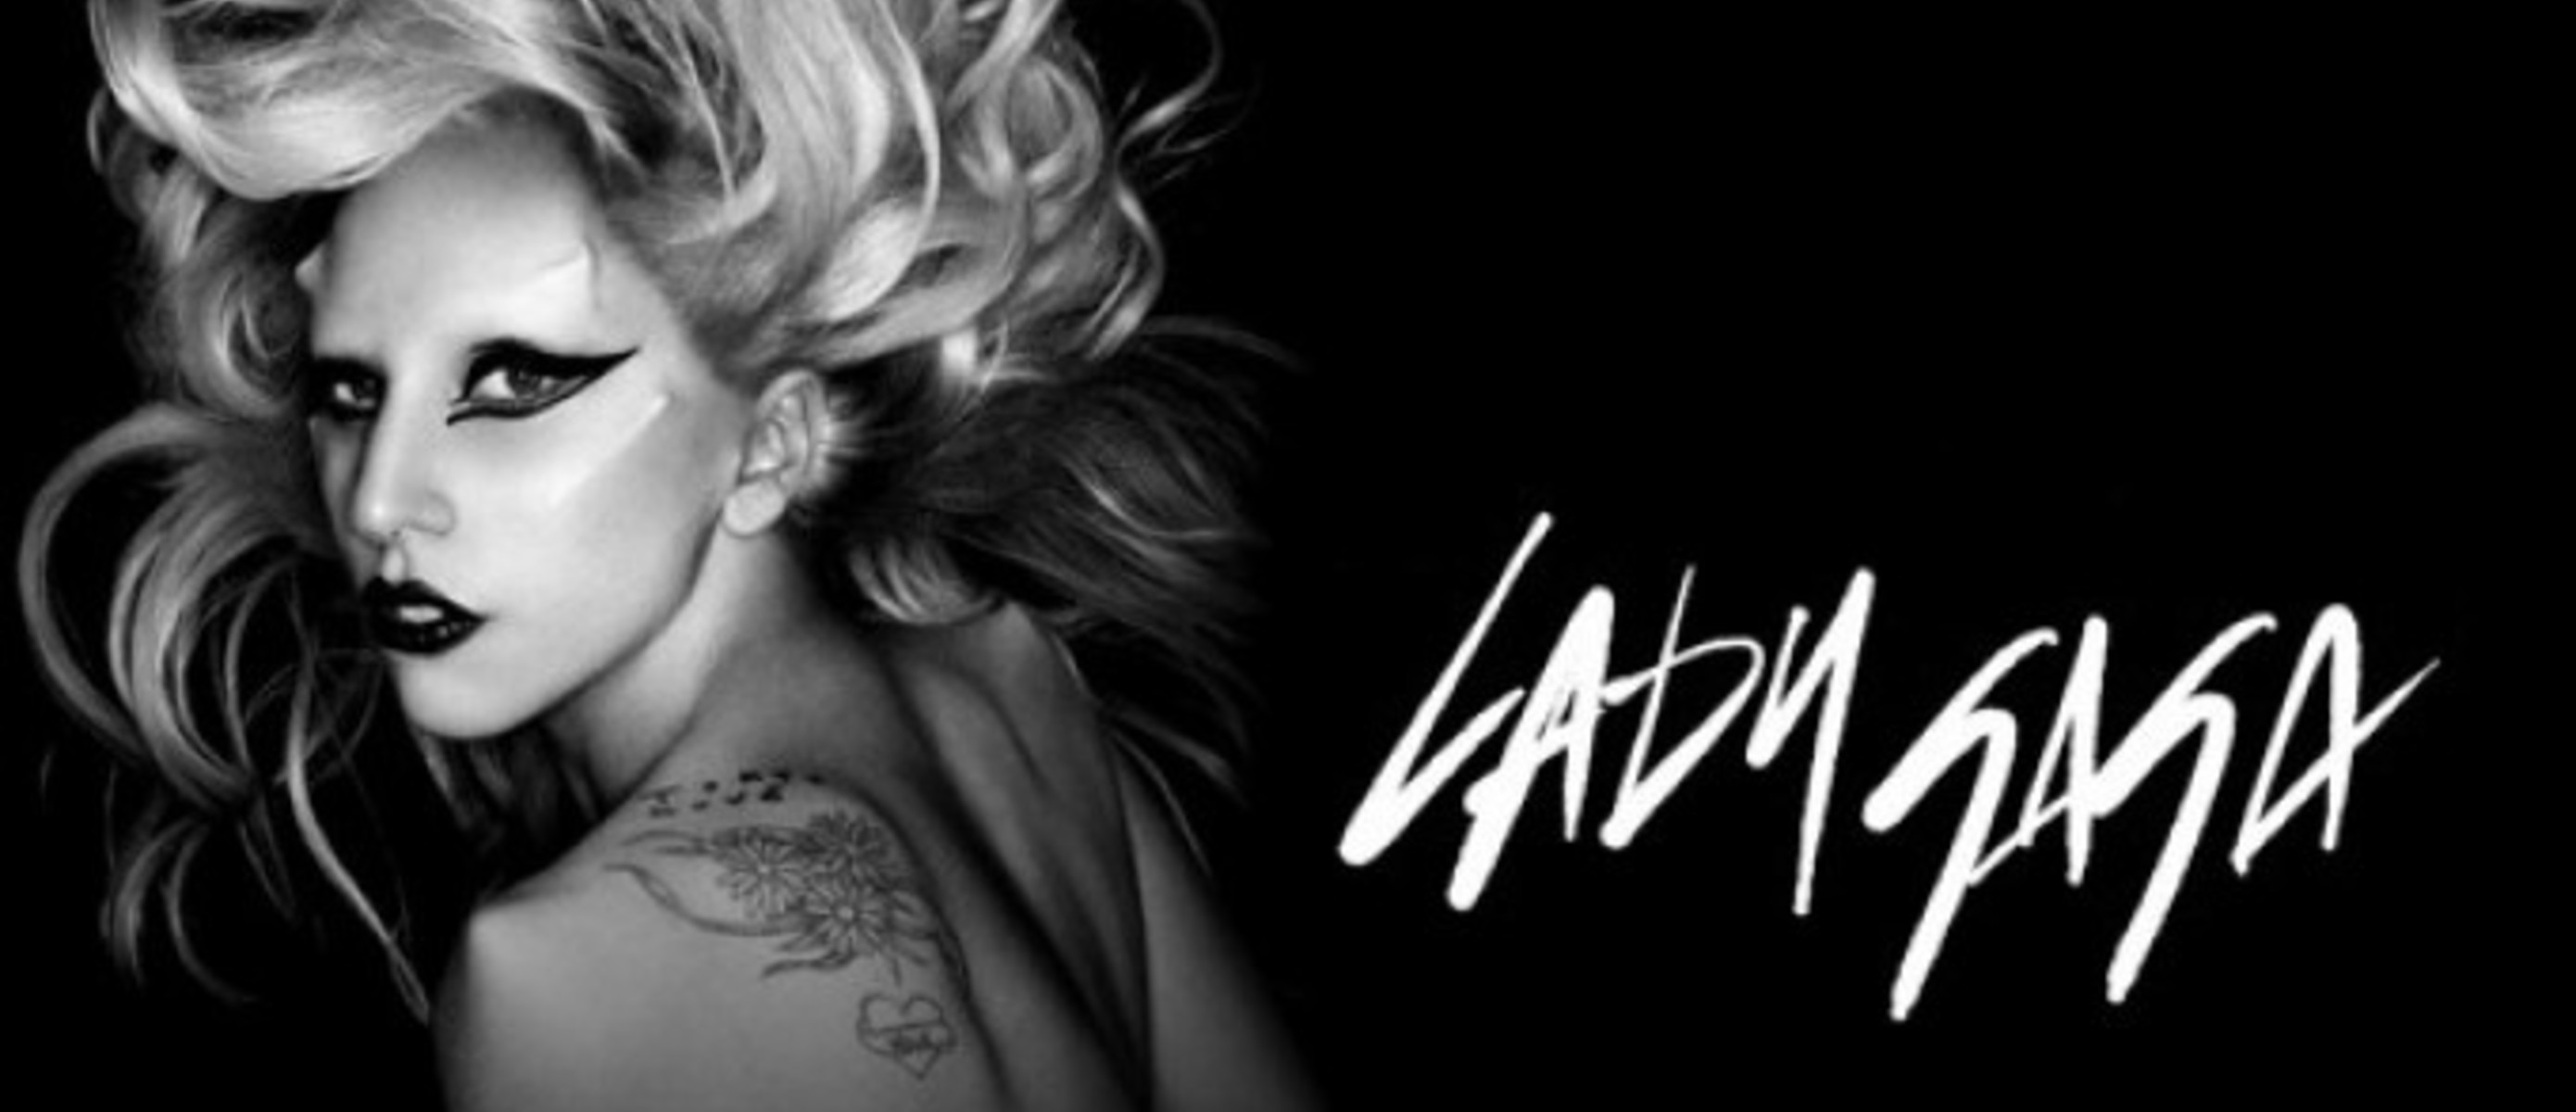 Леди гага на английском. Леди Гага Борн ЗИС Вей. Леди Гага альбомы. Born this way альбом. 2011 - Born this way.